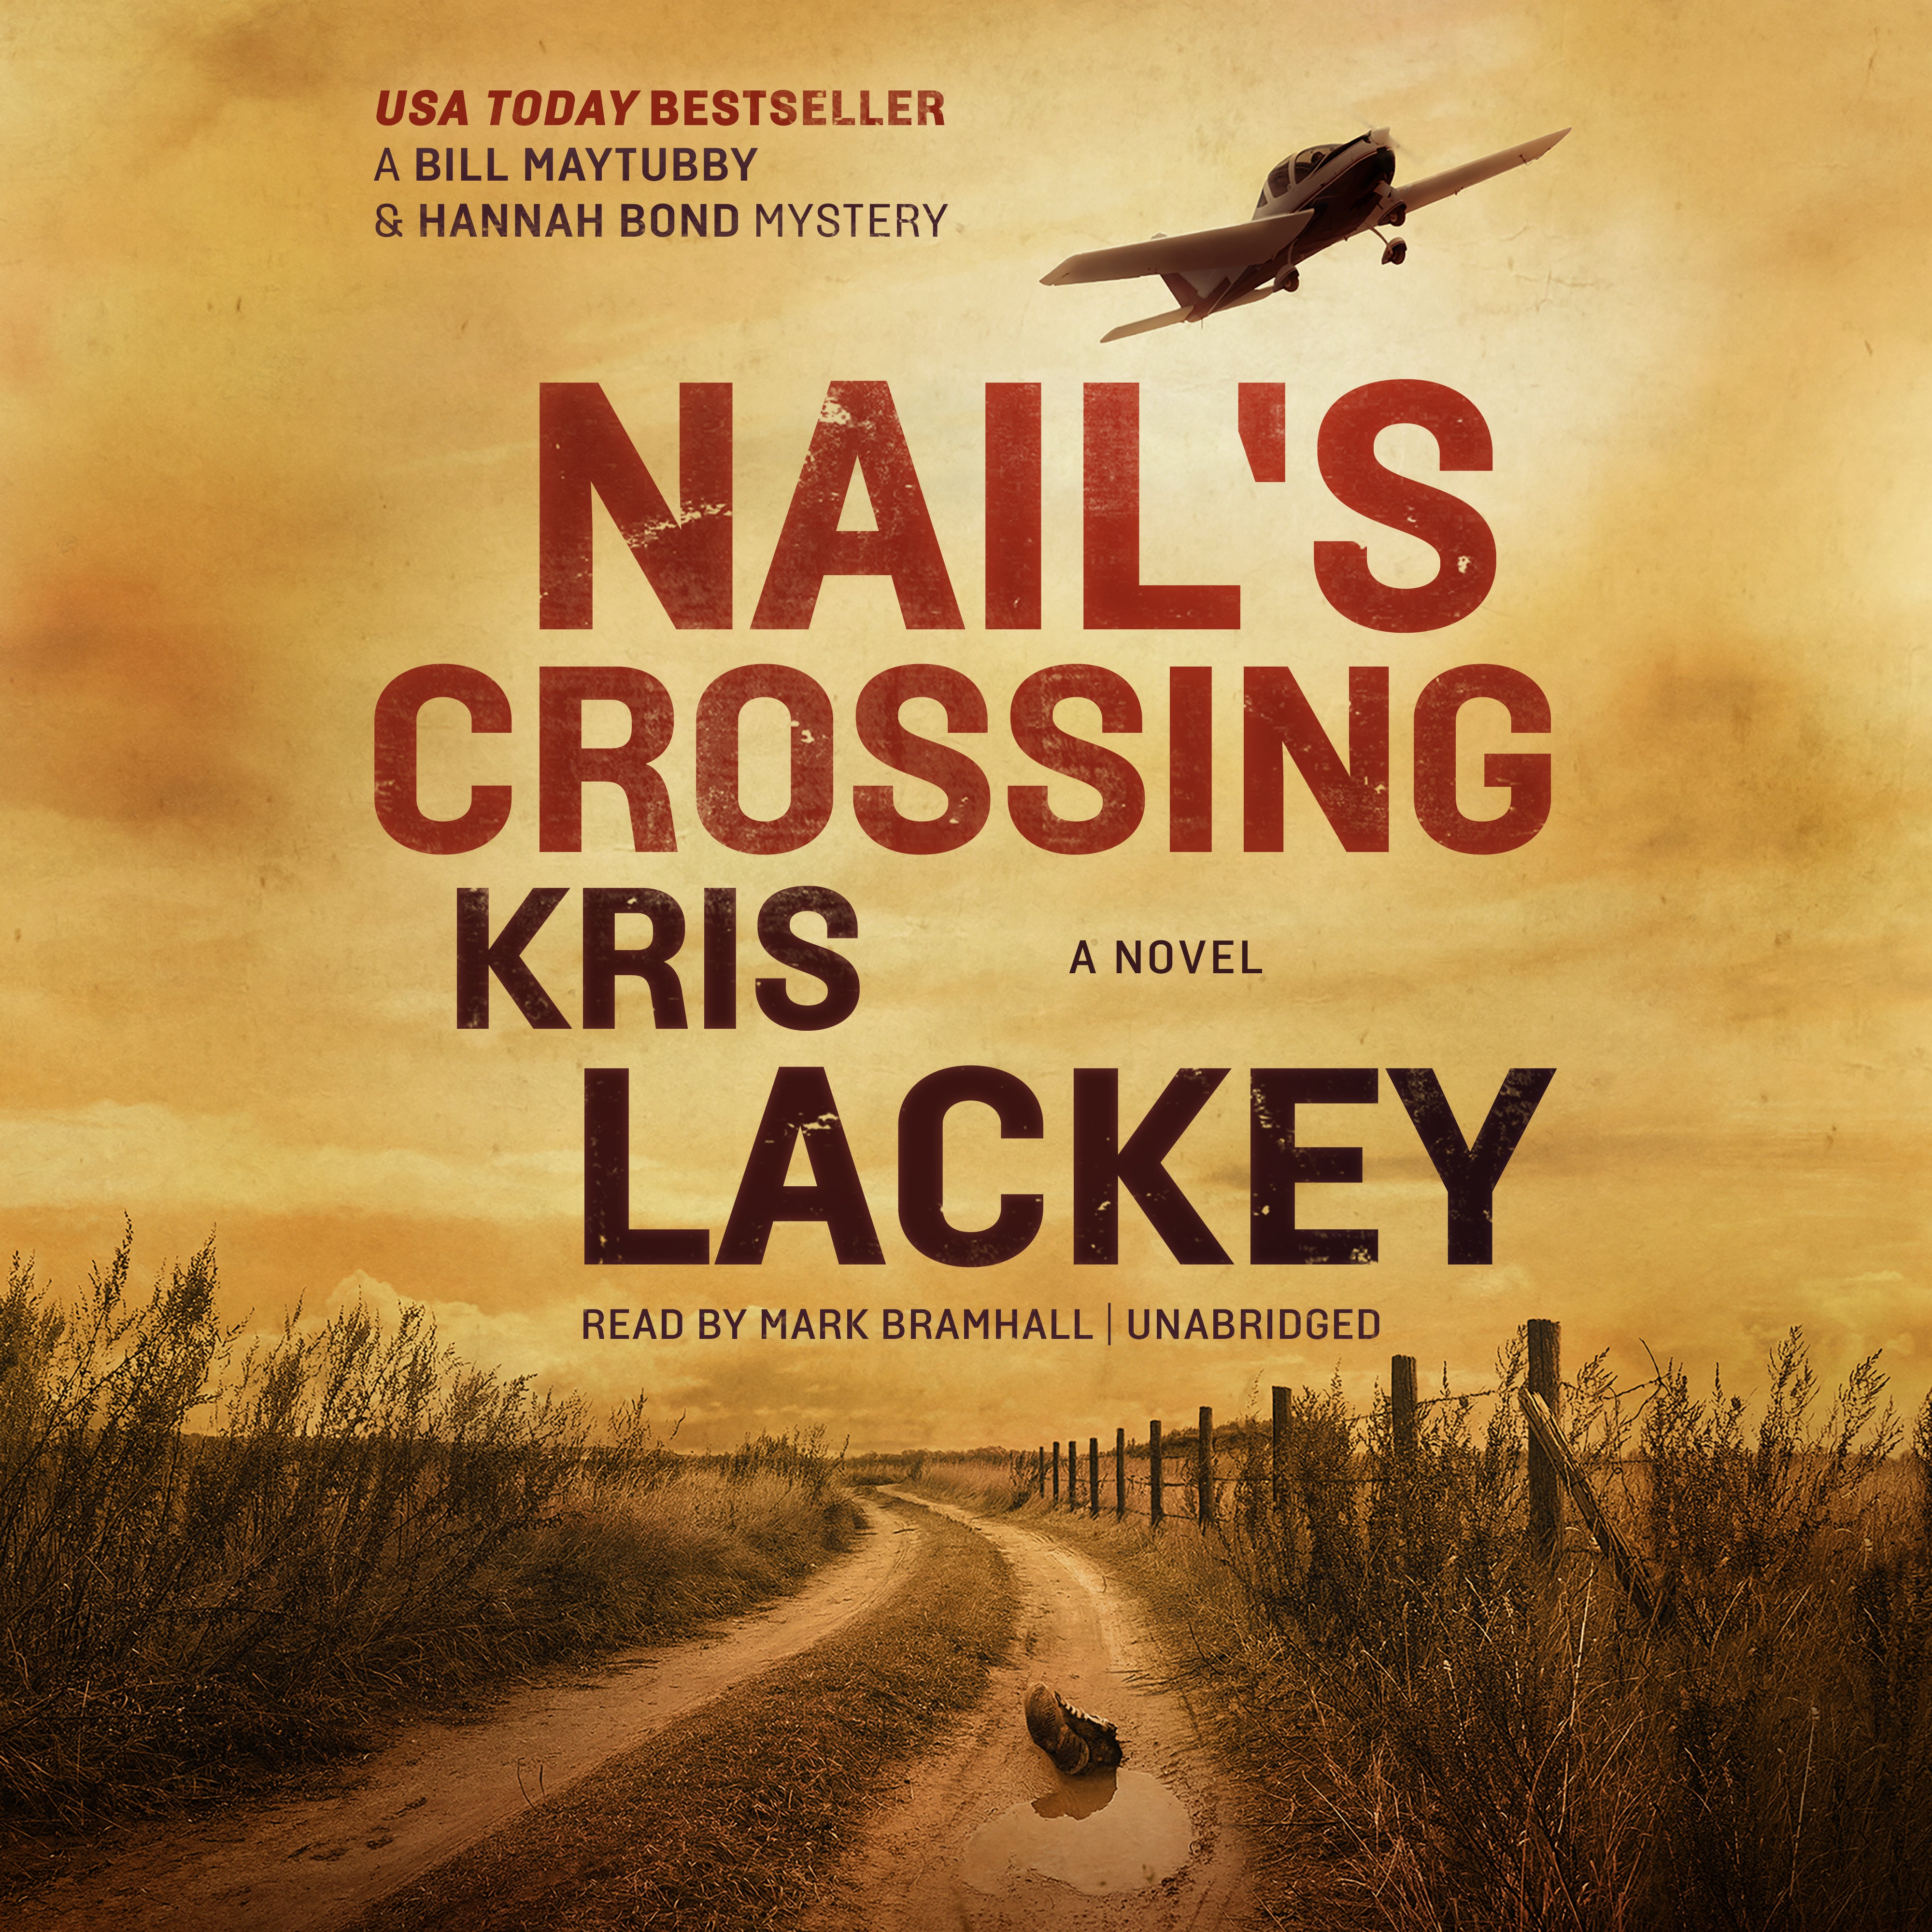 Nail’s Crossing